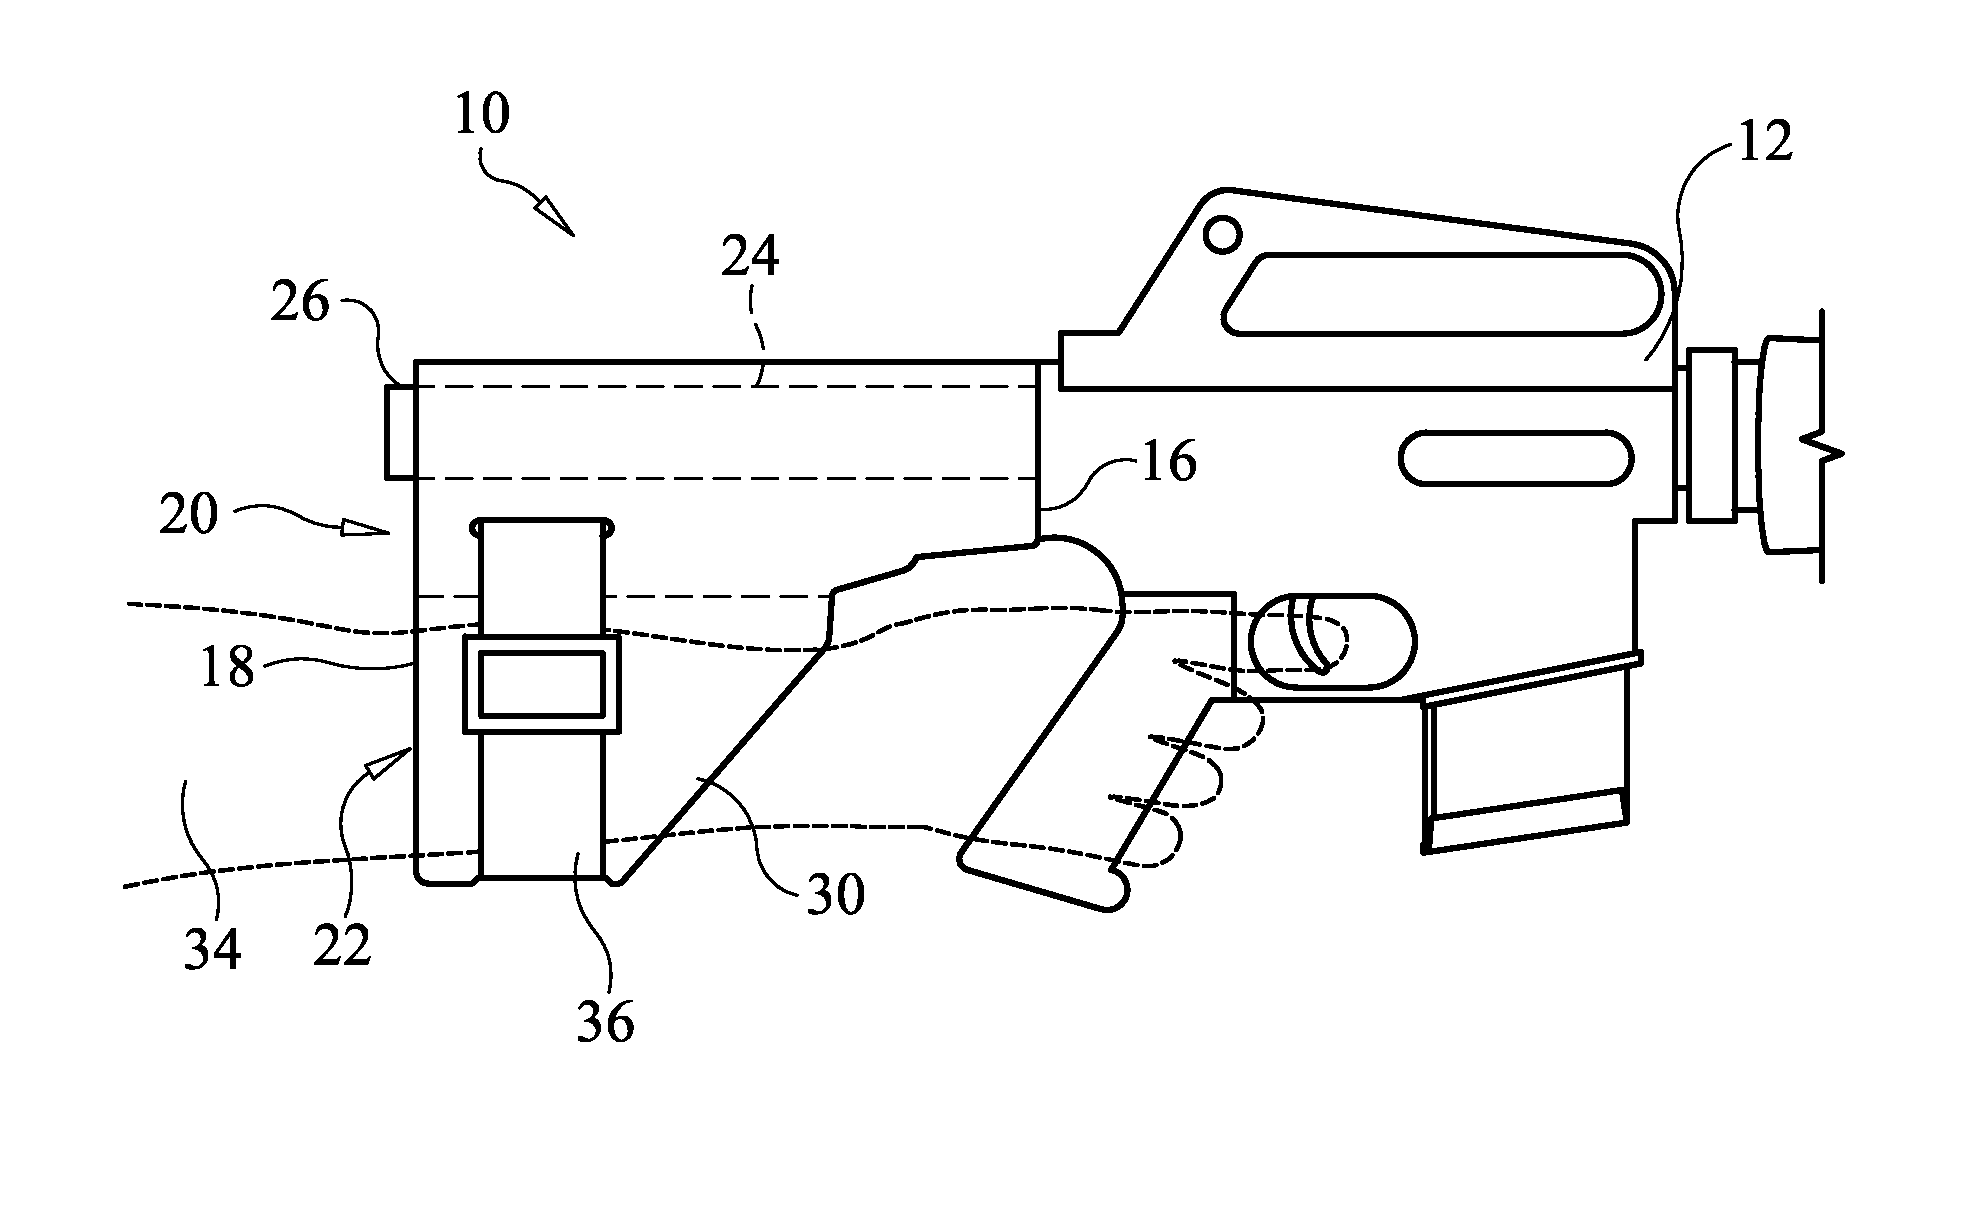 Forearm-gripping stabilizing attachment for a handgun